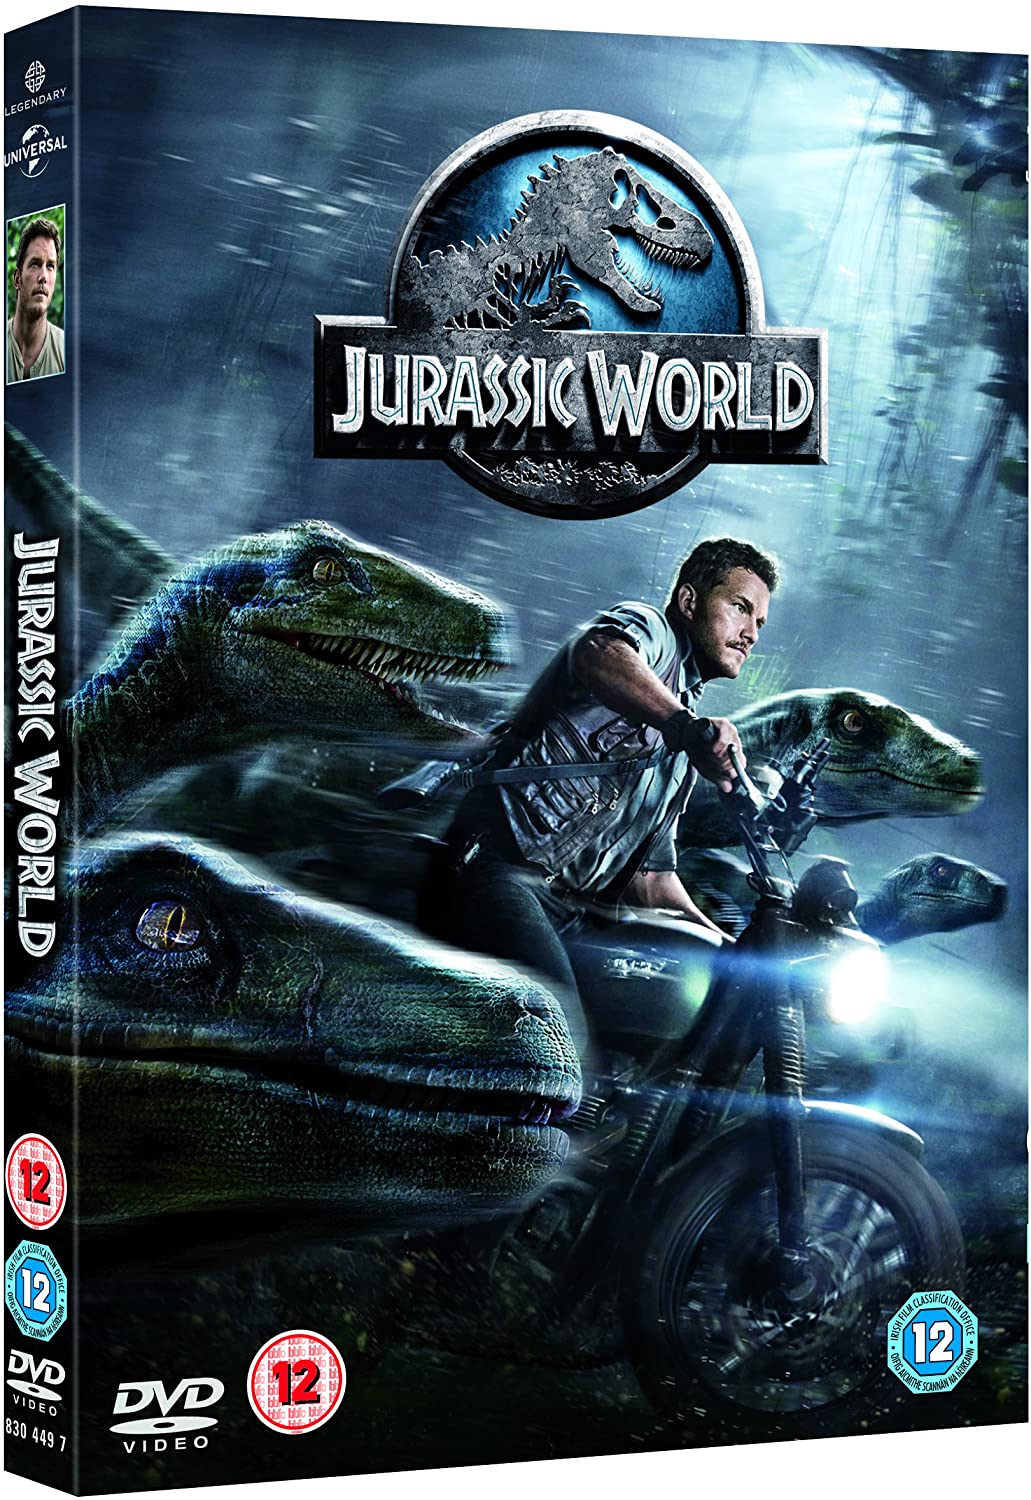 Jurassic World – Action/Sci-Fi [DVD]